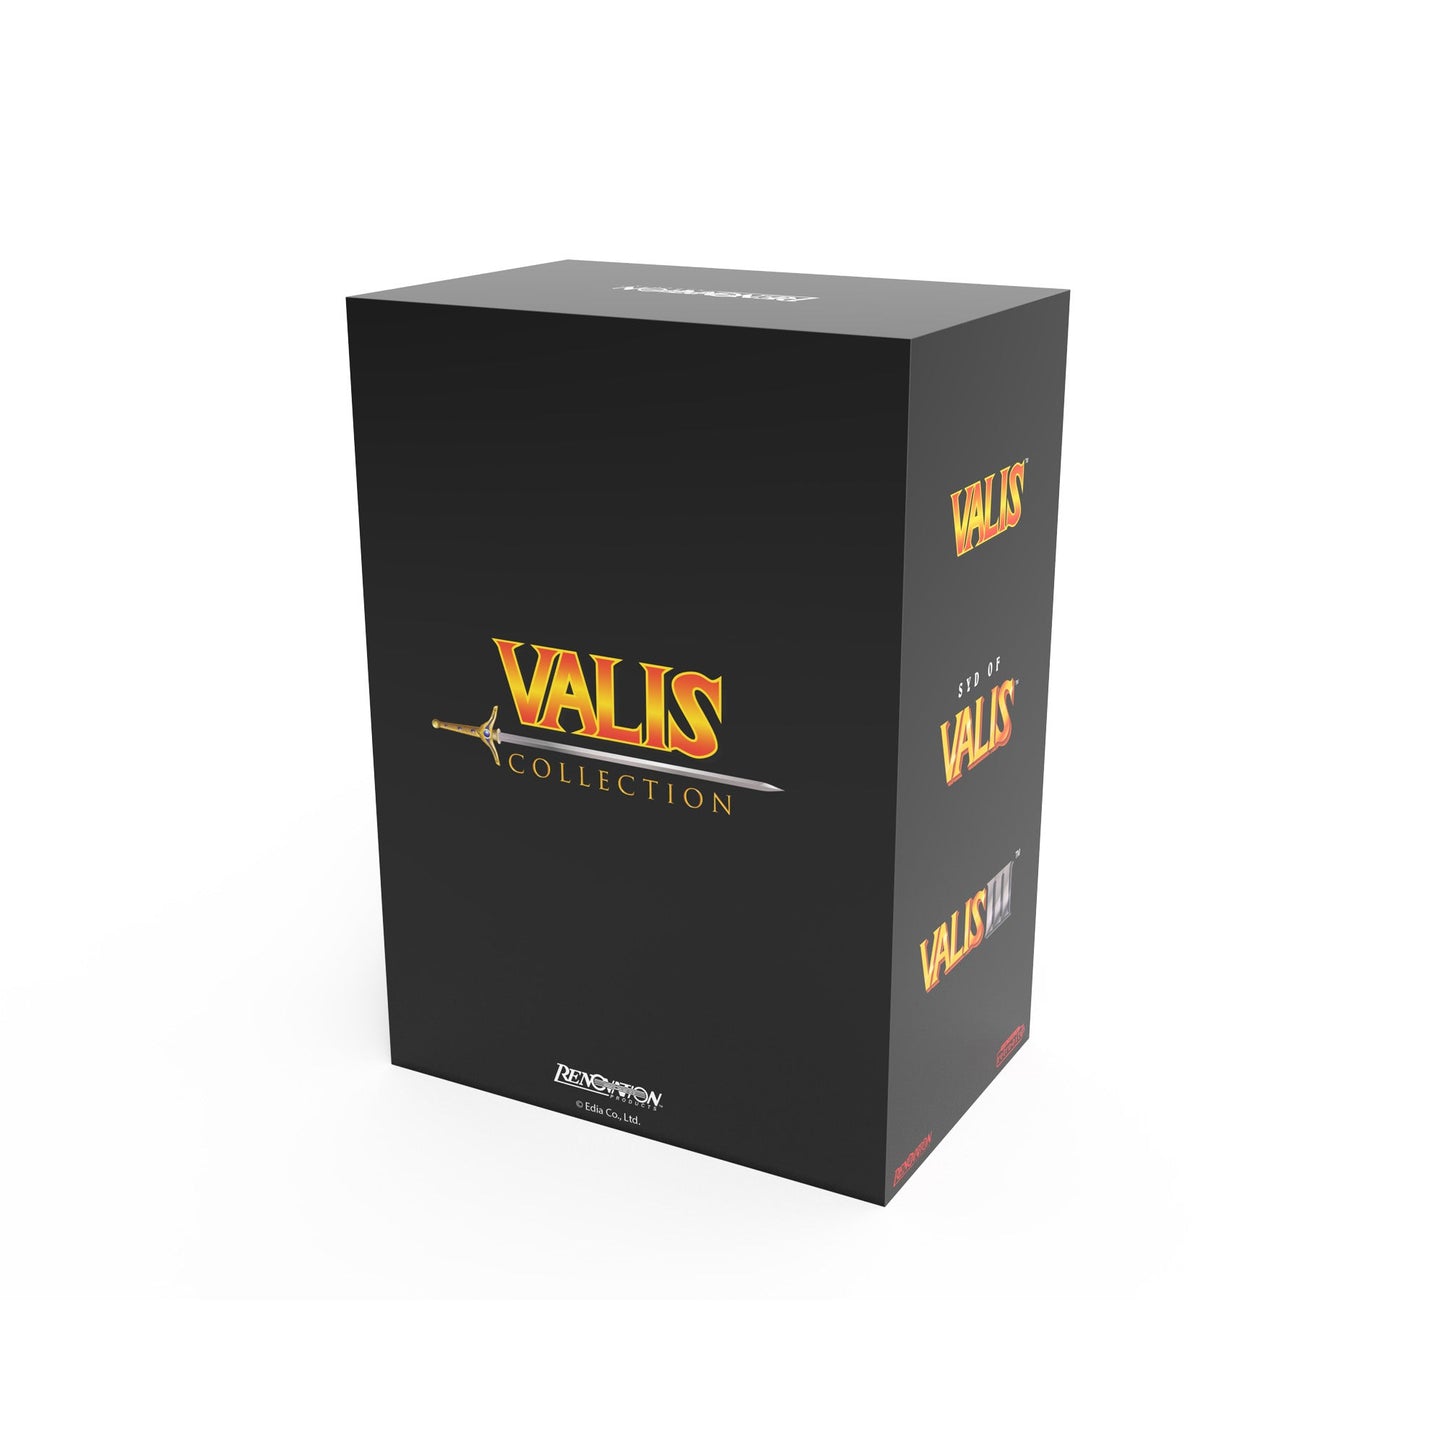 Valis Collection - CastleMania Games